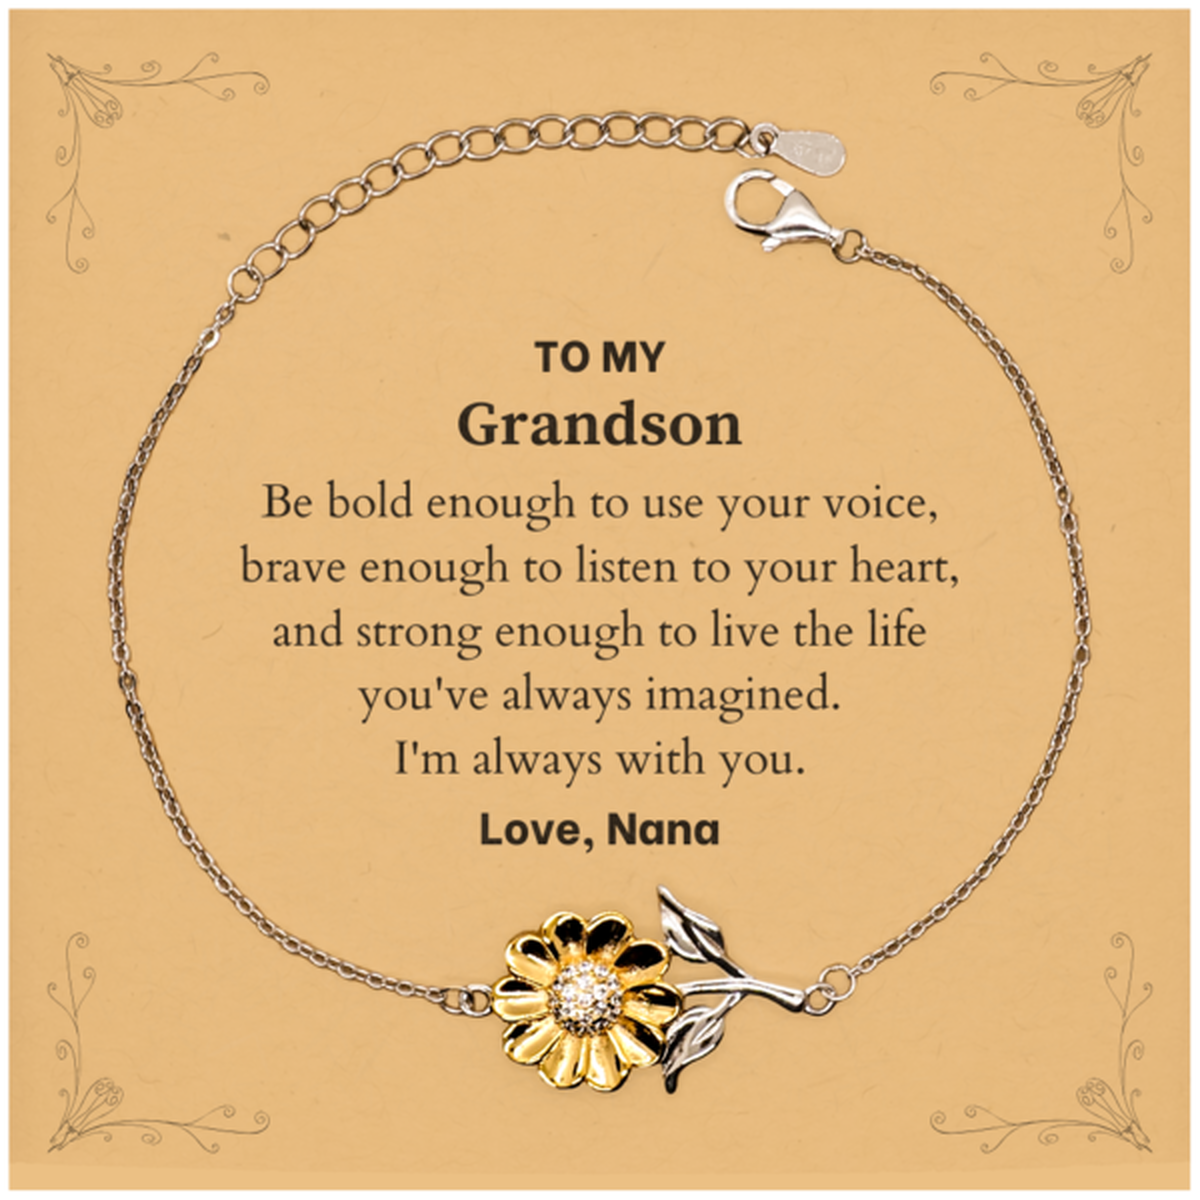 Keepsake Grandson Sunflower Bracelet Gift Idea Graduation Christmas Birthday Grandson from Nana, Grandson Be bold enough to use your voice, brave enough to listen to your heart. Love, Nana